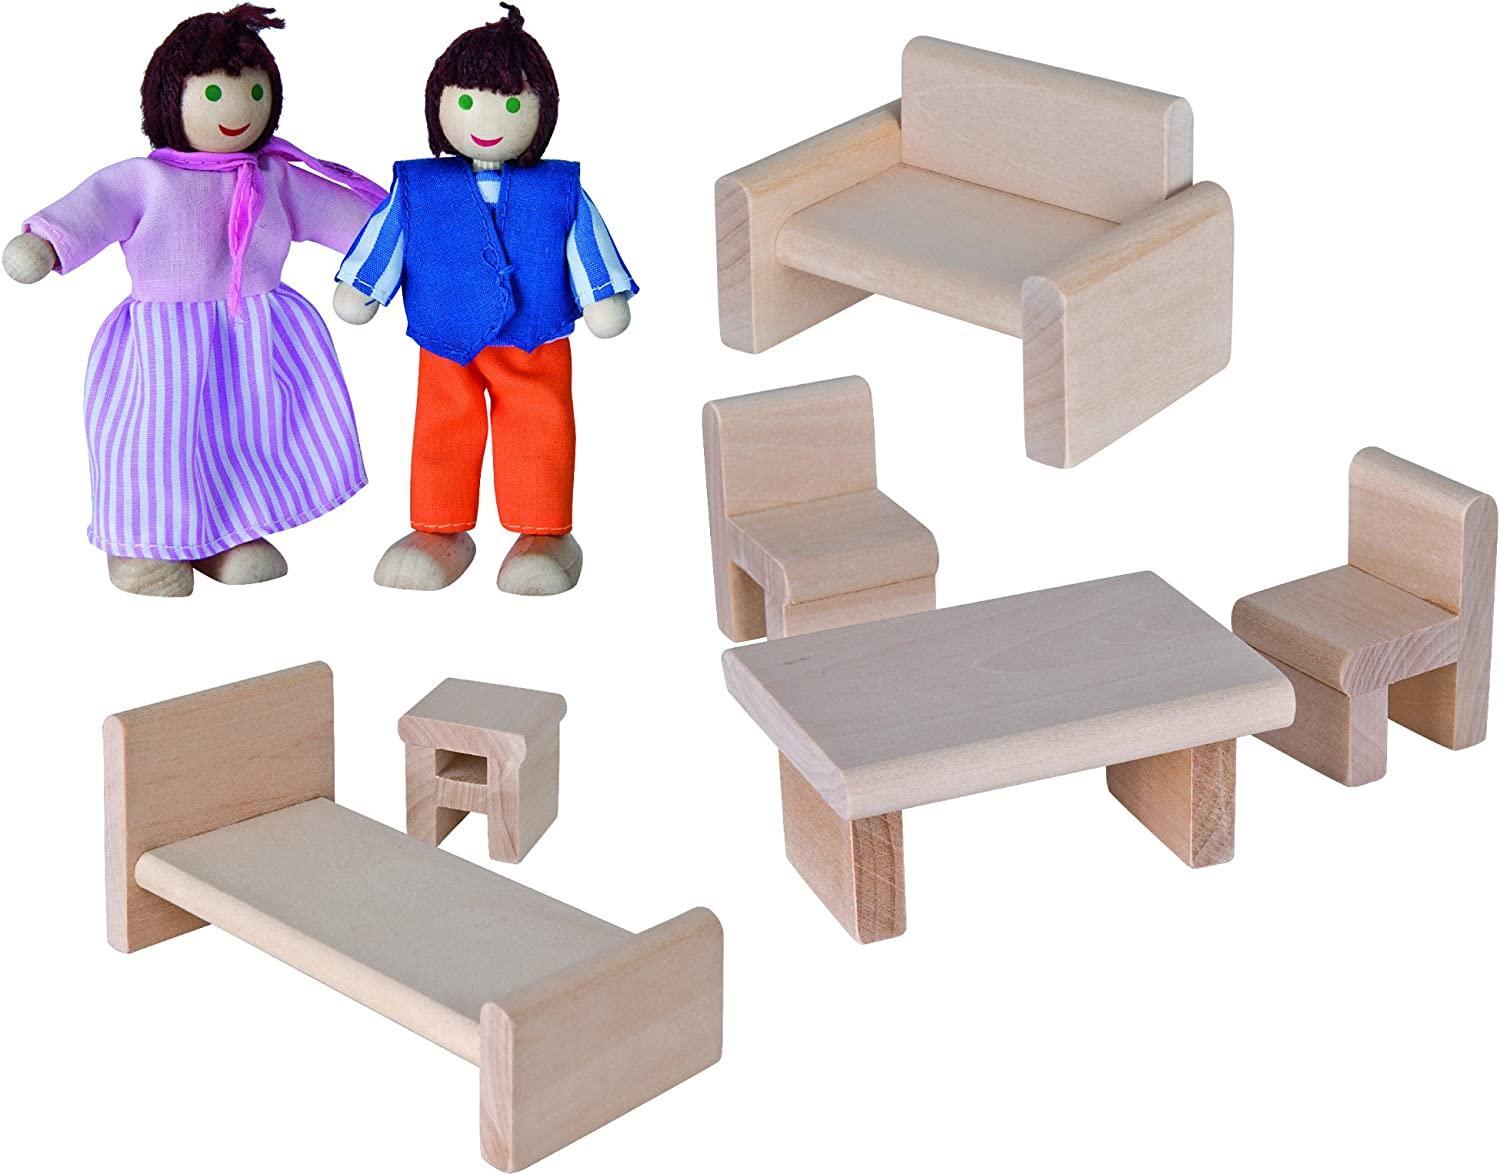 simba eichhorn casa delle bambole in legno